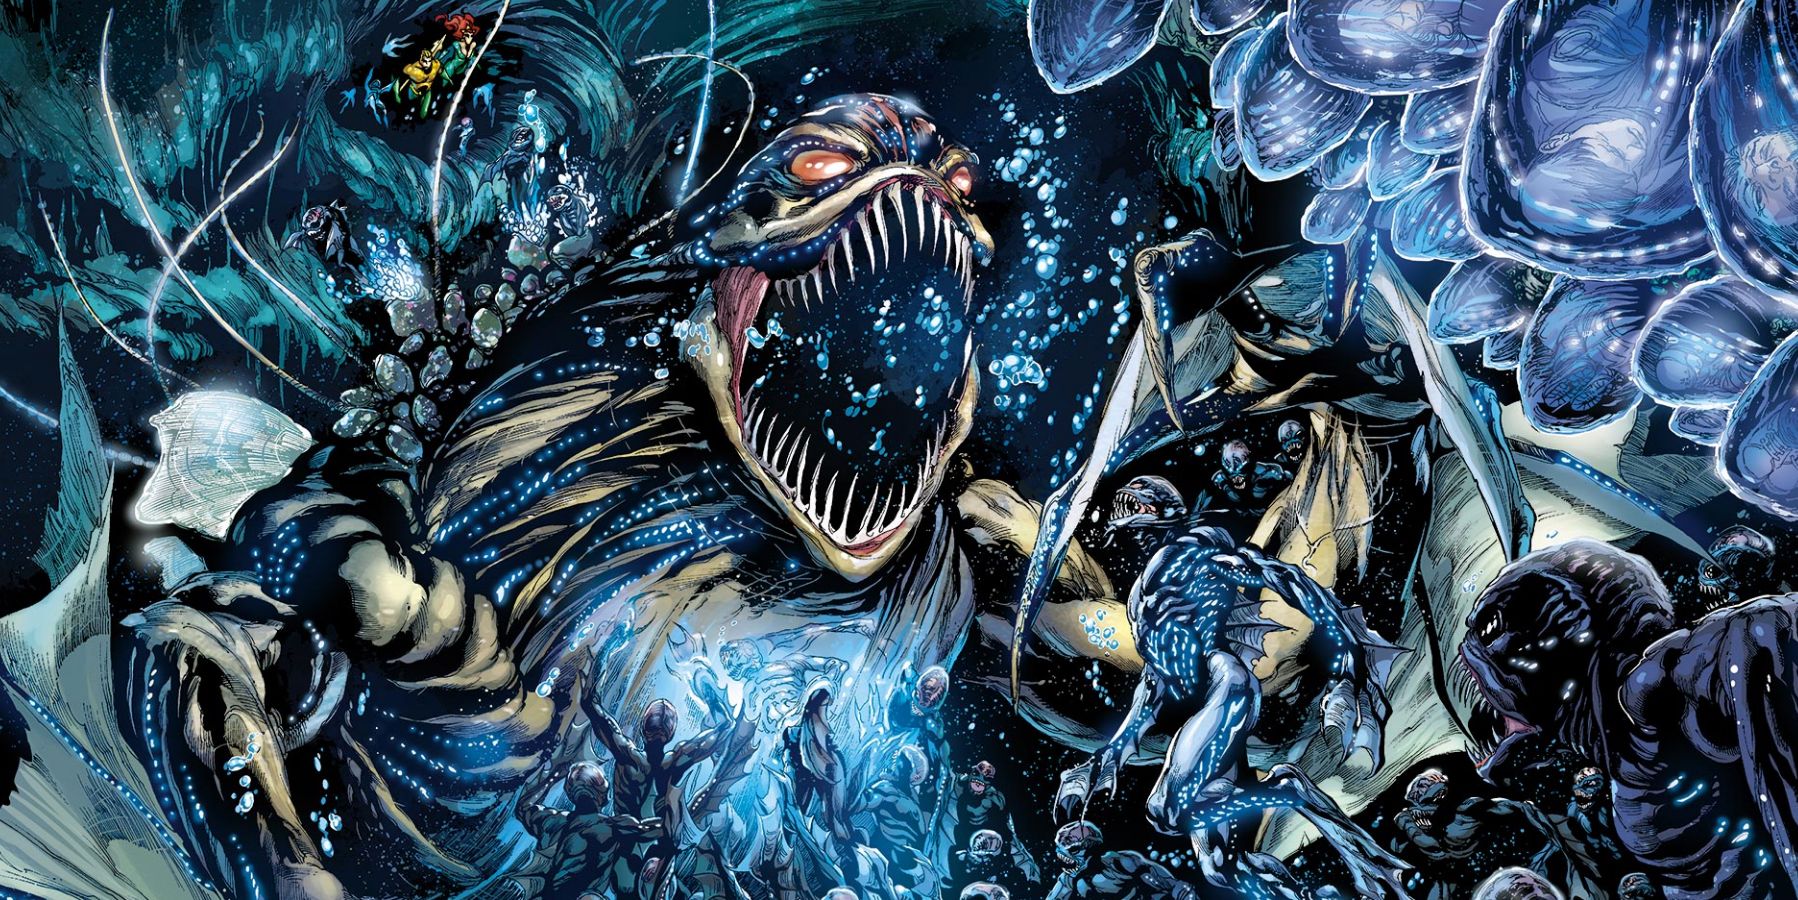 Aquaman and Mera swim into The Trench in DC Comics